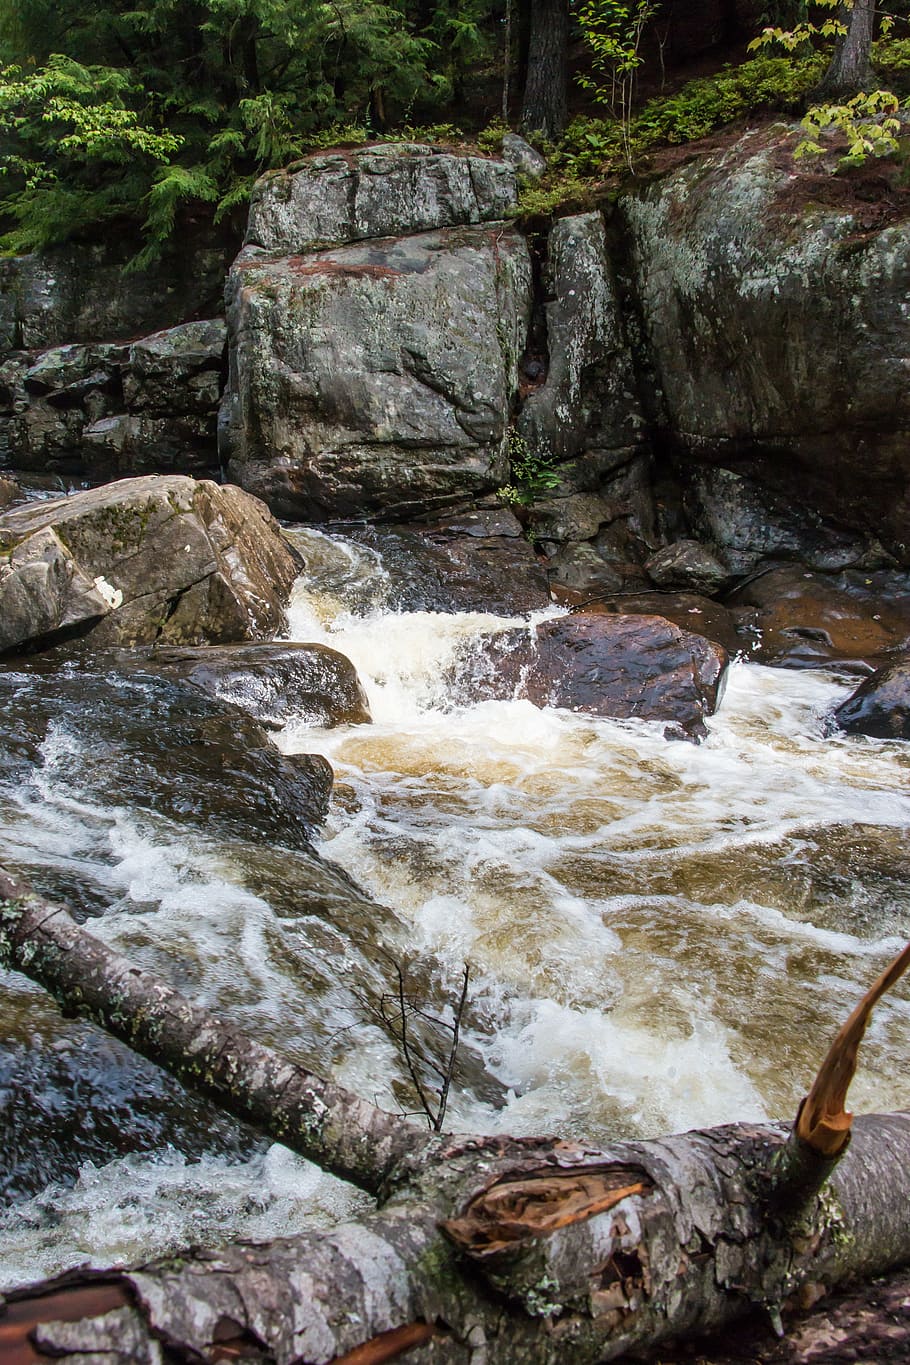 cachoeira, natureza, rio, corredeiras, adirondacks, água, rocha, água corrente, movimento, objeto de rocha